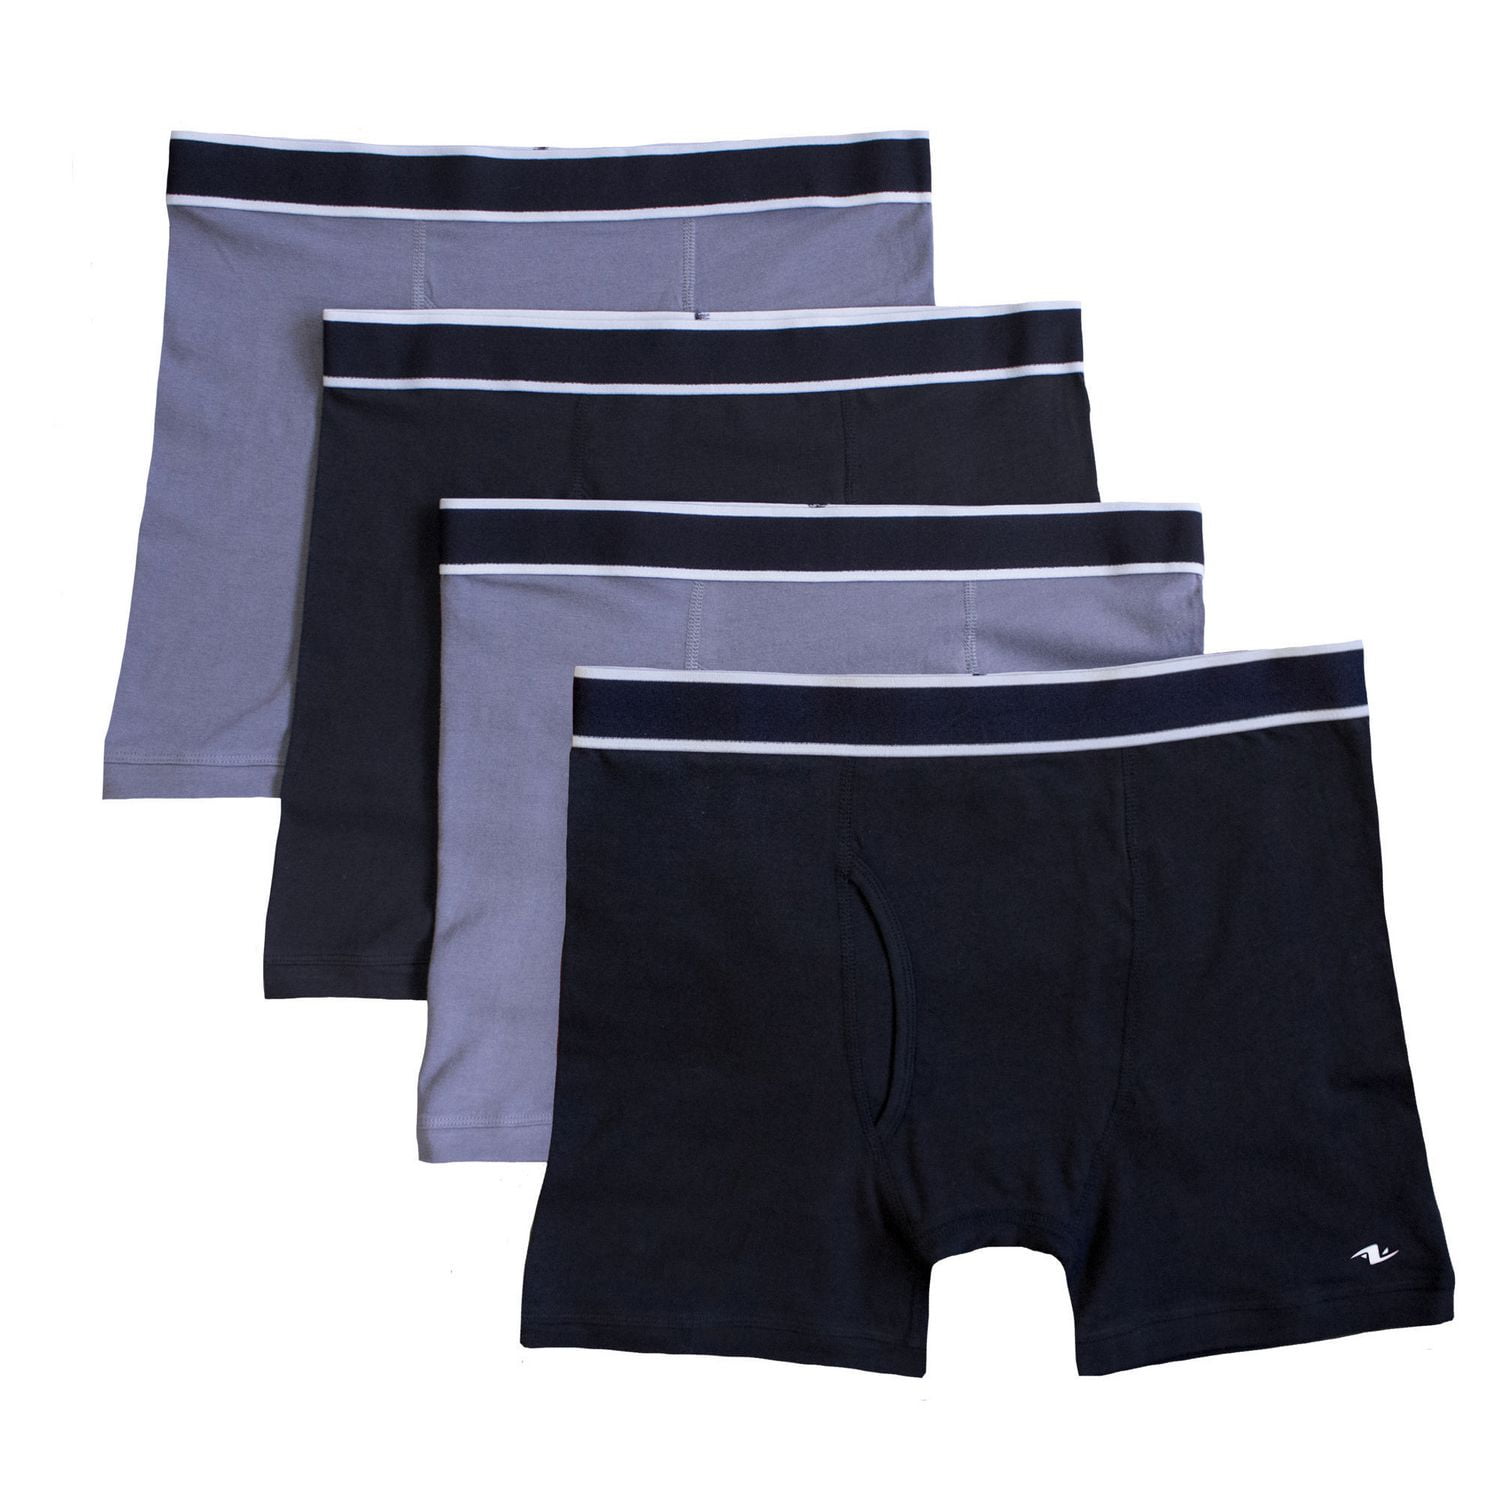 Kecks Classic Navy Underwear Action Sport's Boxer Short's